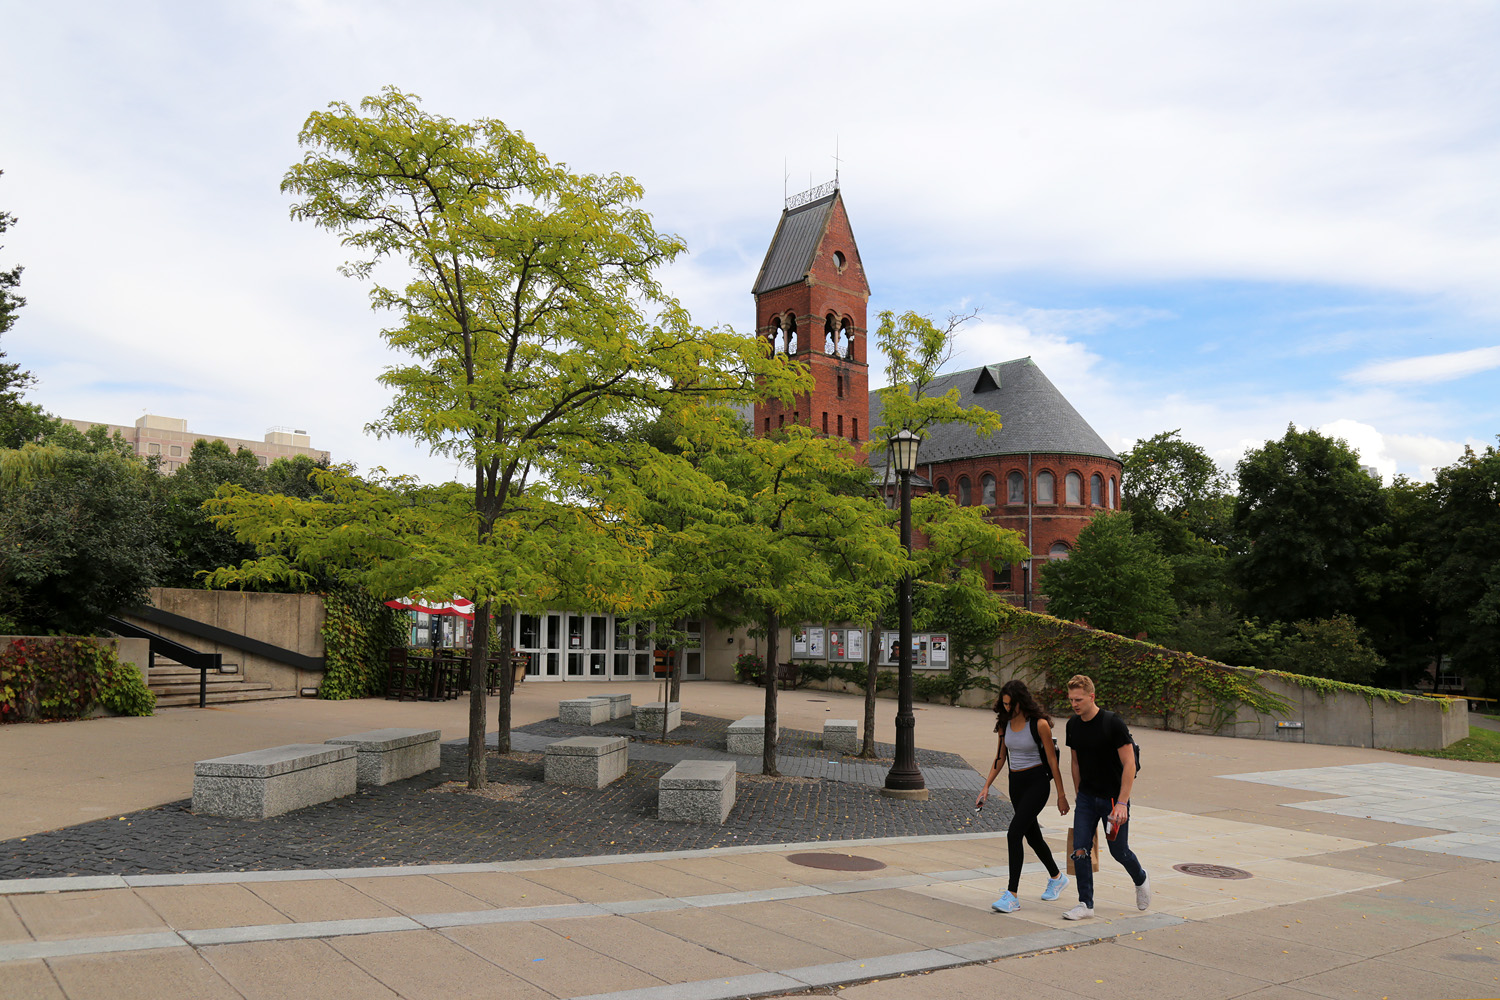 bill-hocker-ho-plaza-cornell-university-ithaca-new-york-2019